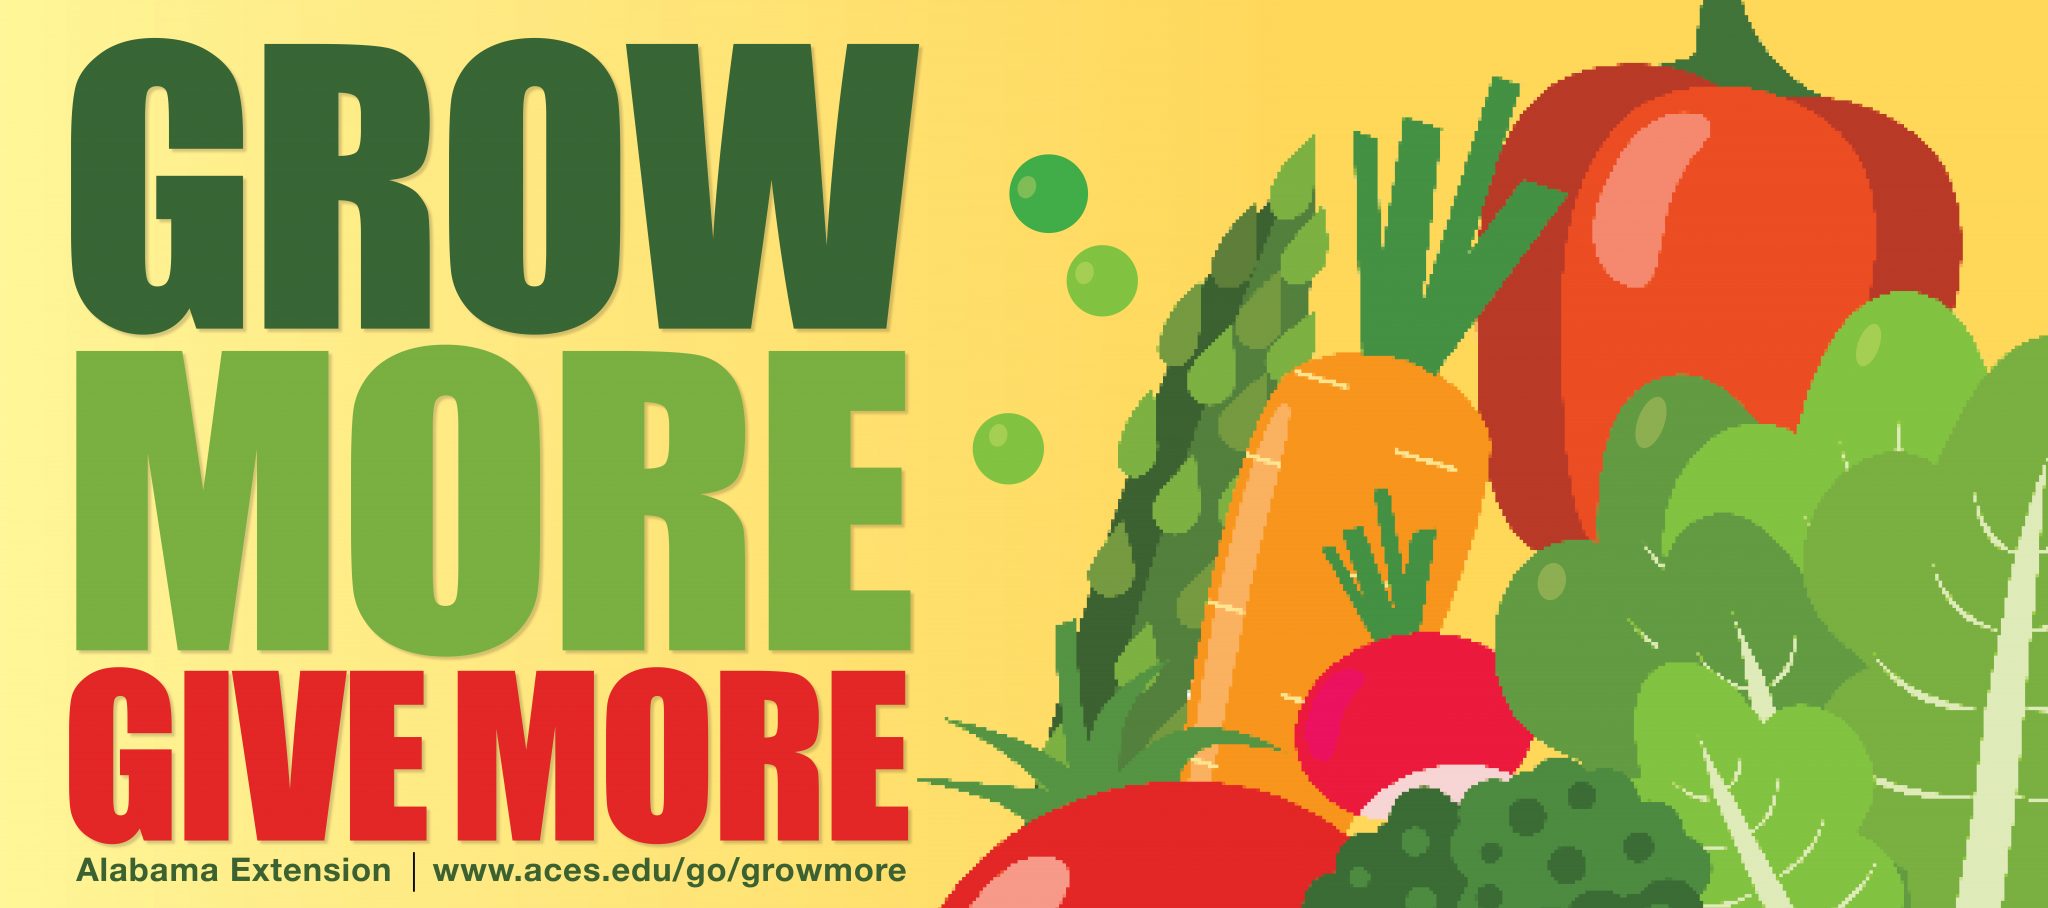 Grow More, Give More - SoSA and Alabama Universities